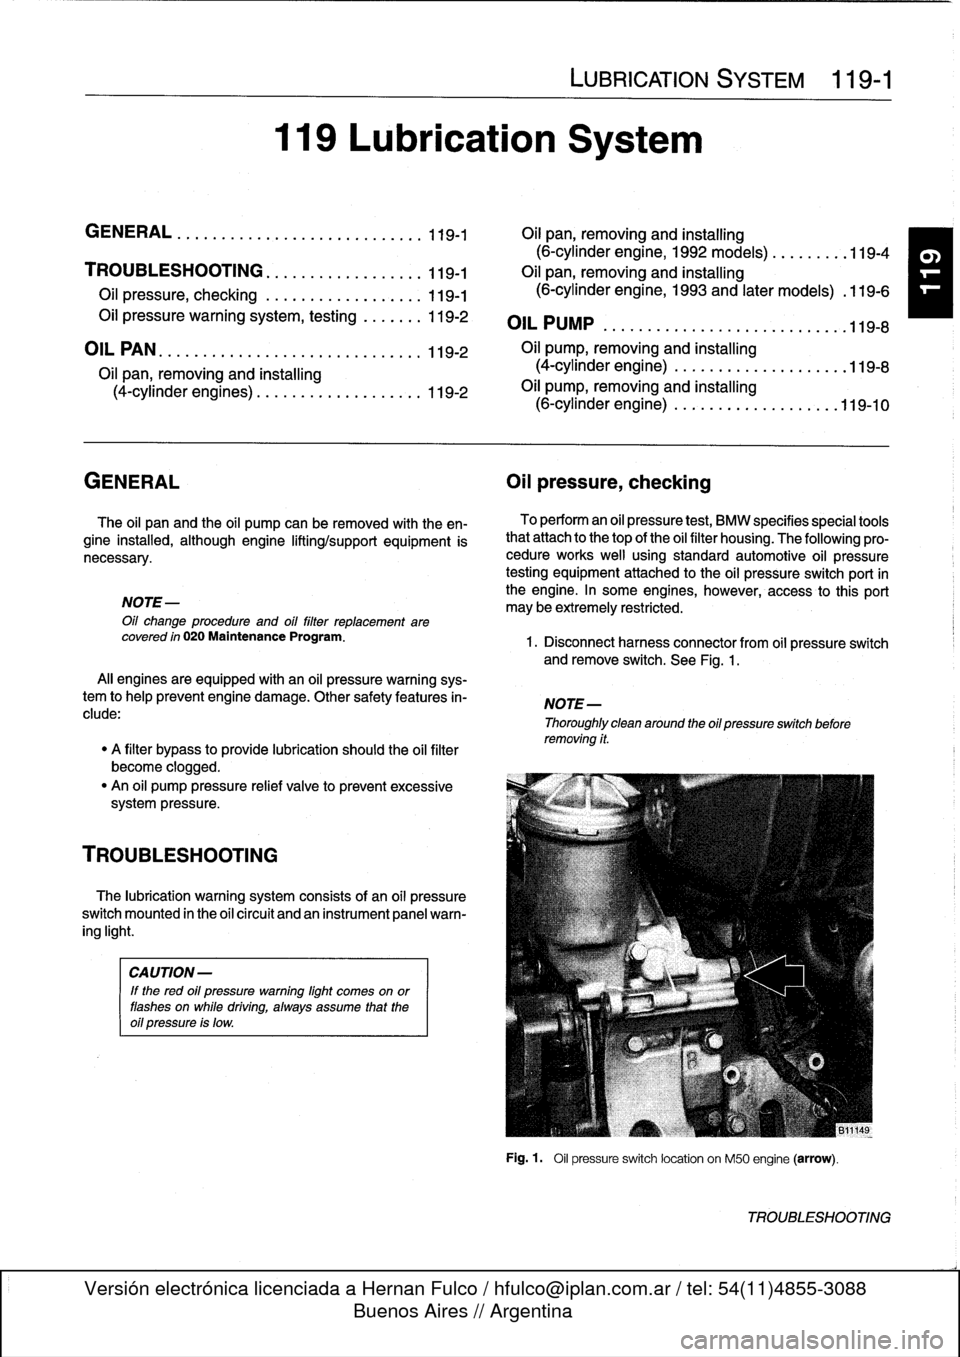 BMW 318i 1998 E36 Workshop Manual 
119
Lubrication
System

LUBRICATION
SYSTEM

	

119-1

GENERAL
.
.
.
.
.
.
...
.
.
.
.
.
.
.
...,
,
...
.
.
.
.
119-1

	

OH
pan,
removing
and
installing

(6-cylinder
engine,
1992
models)
.
.
.
.
.
.
